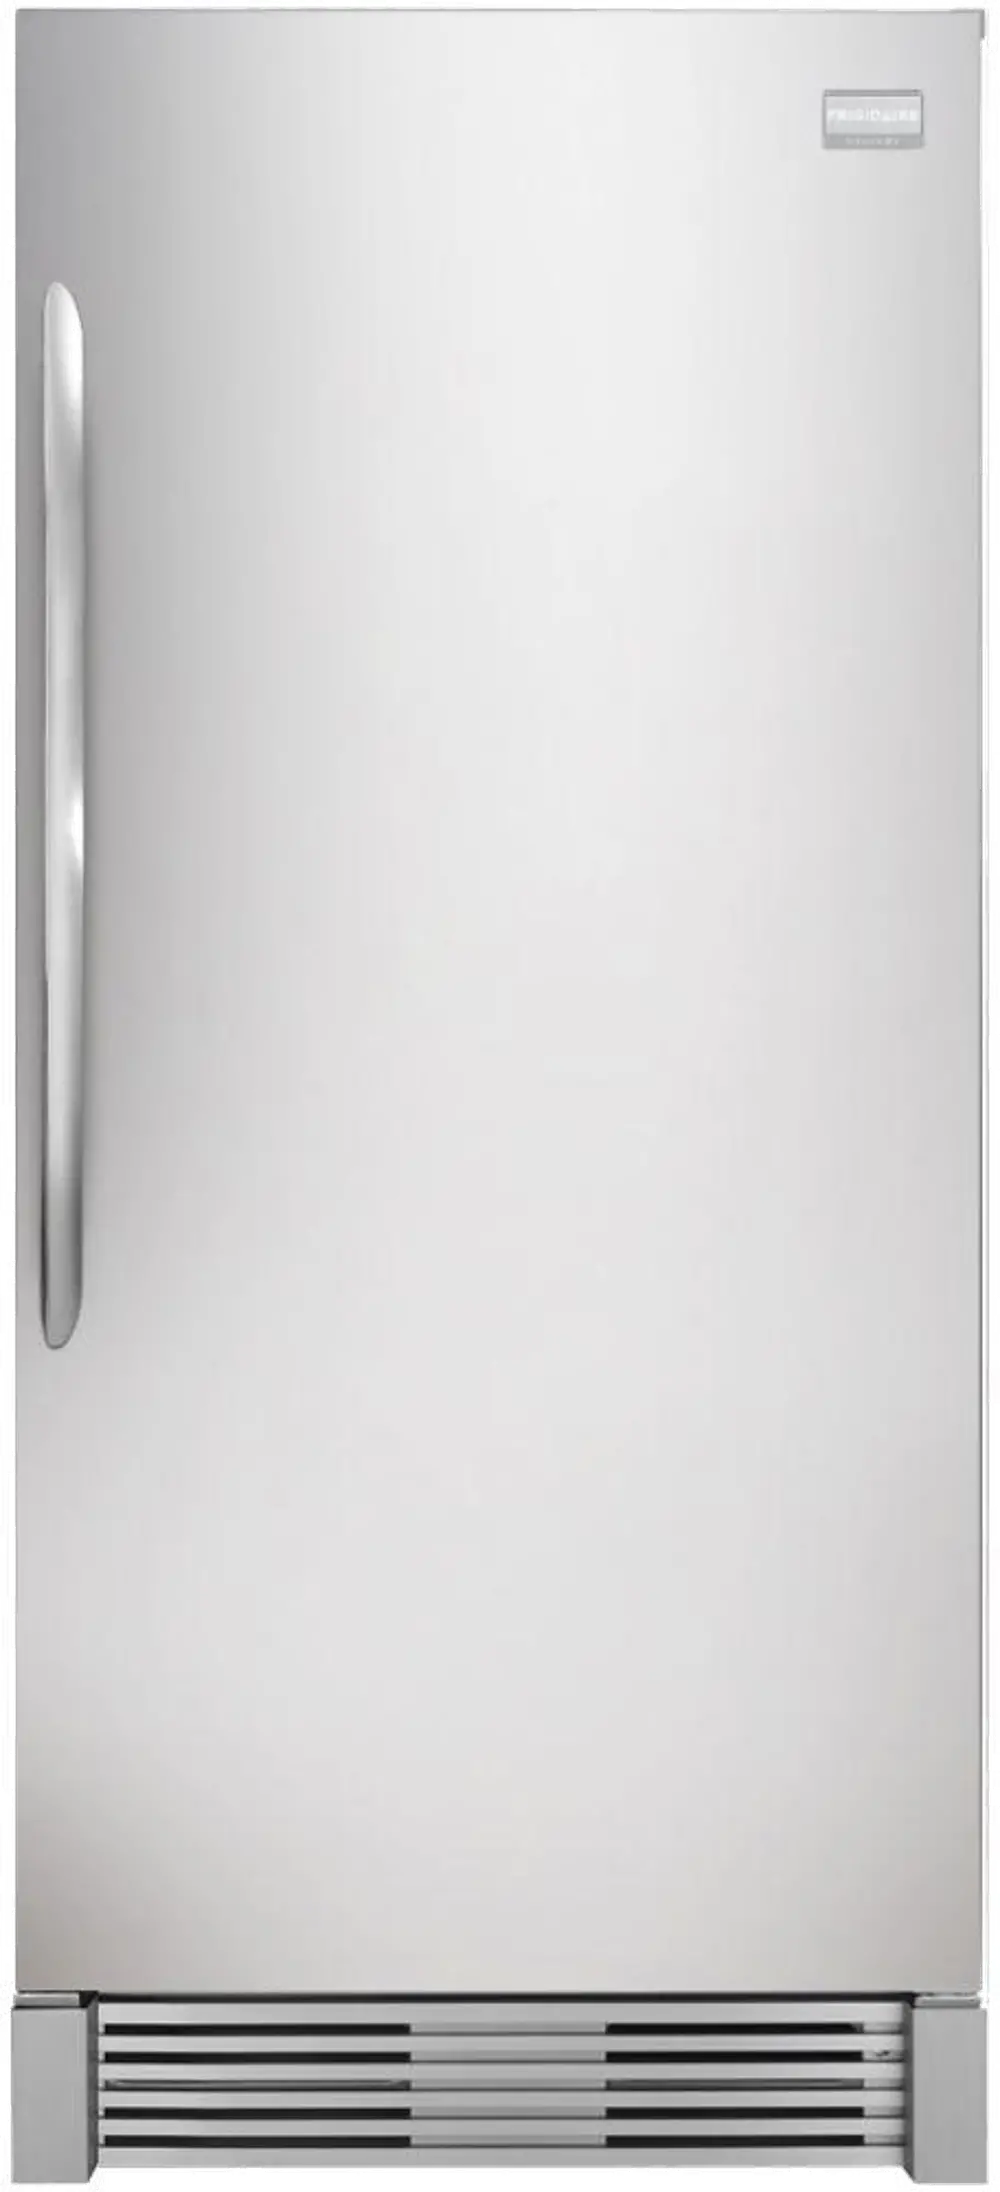 FGRU19F6QF Frigidaire All Refrigerator - Stainless Steel-1